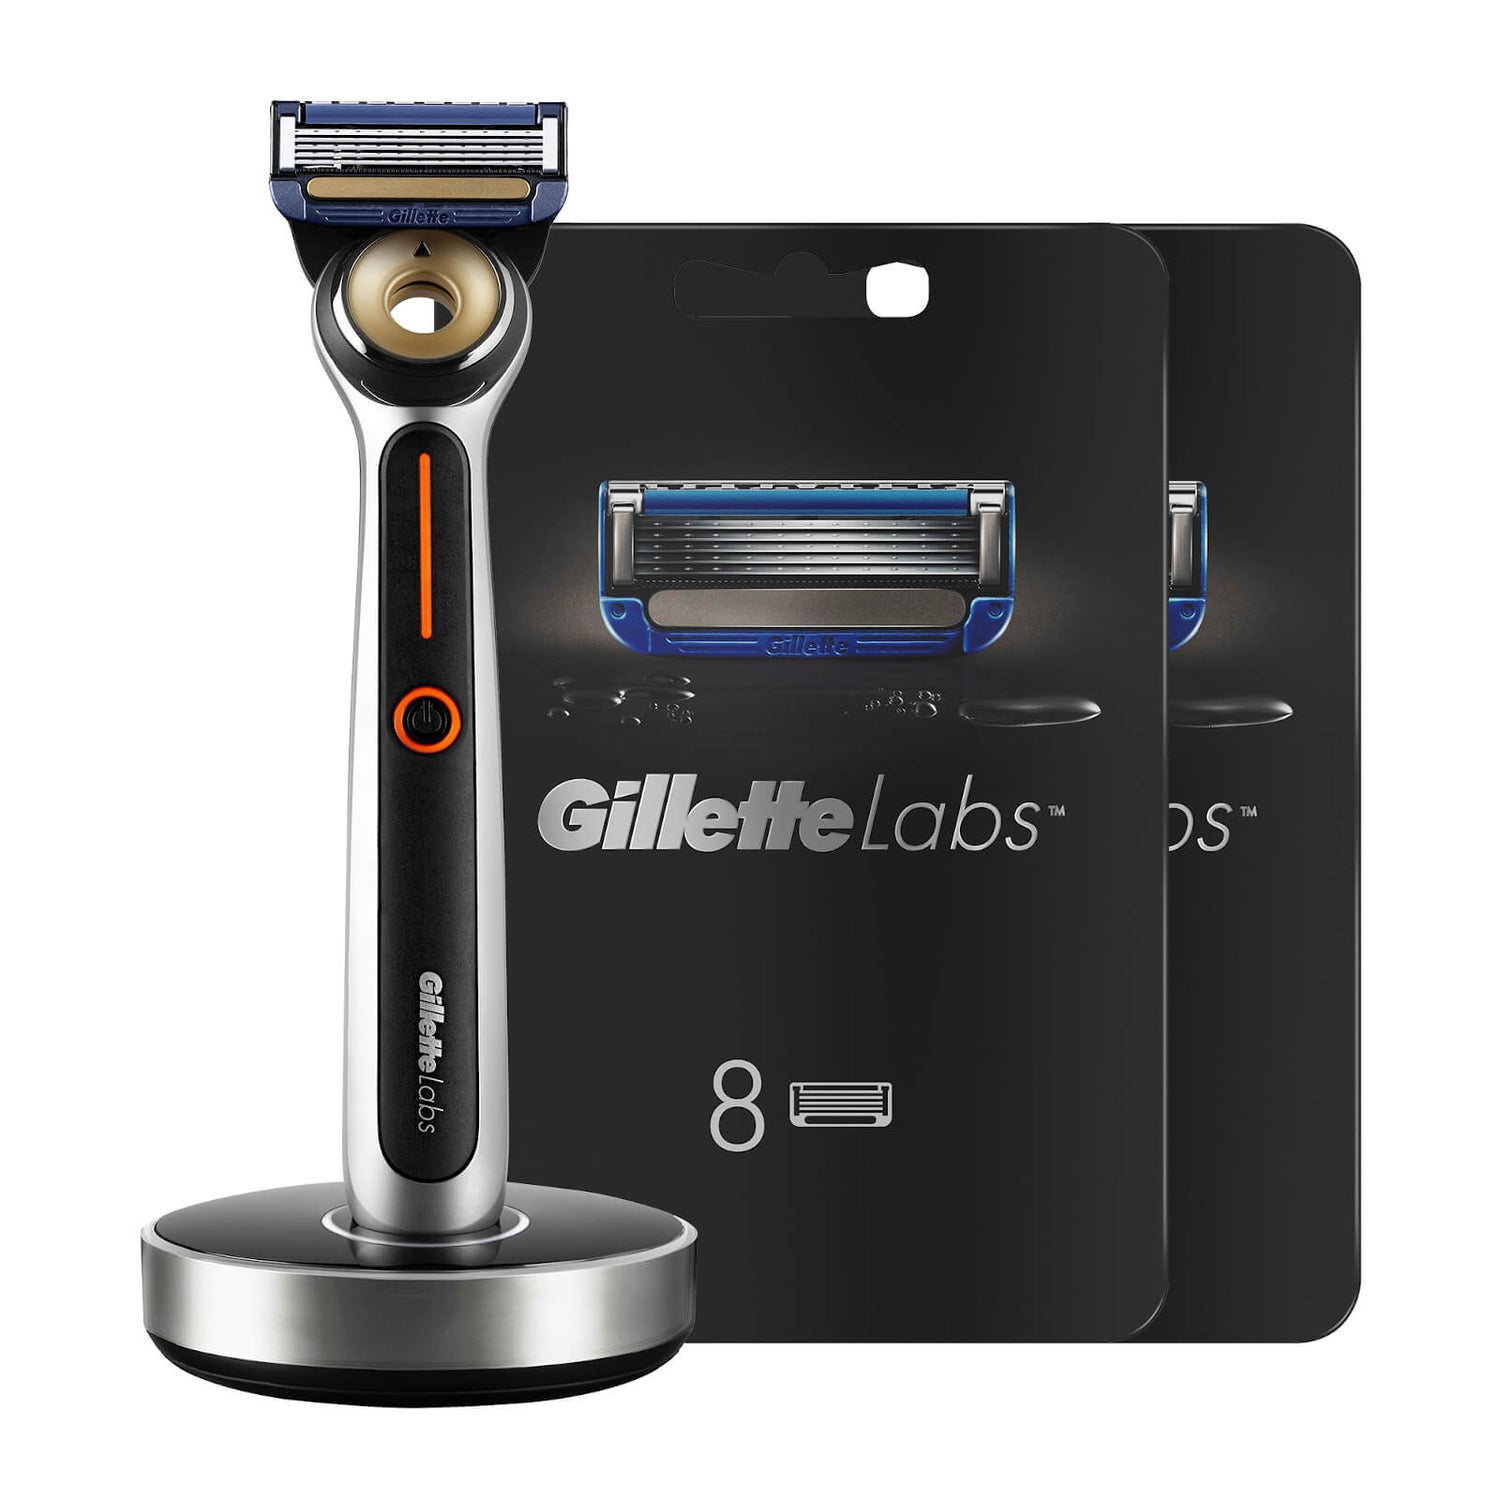 GilletteLabs Heated Razor Starter Kit